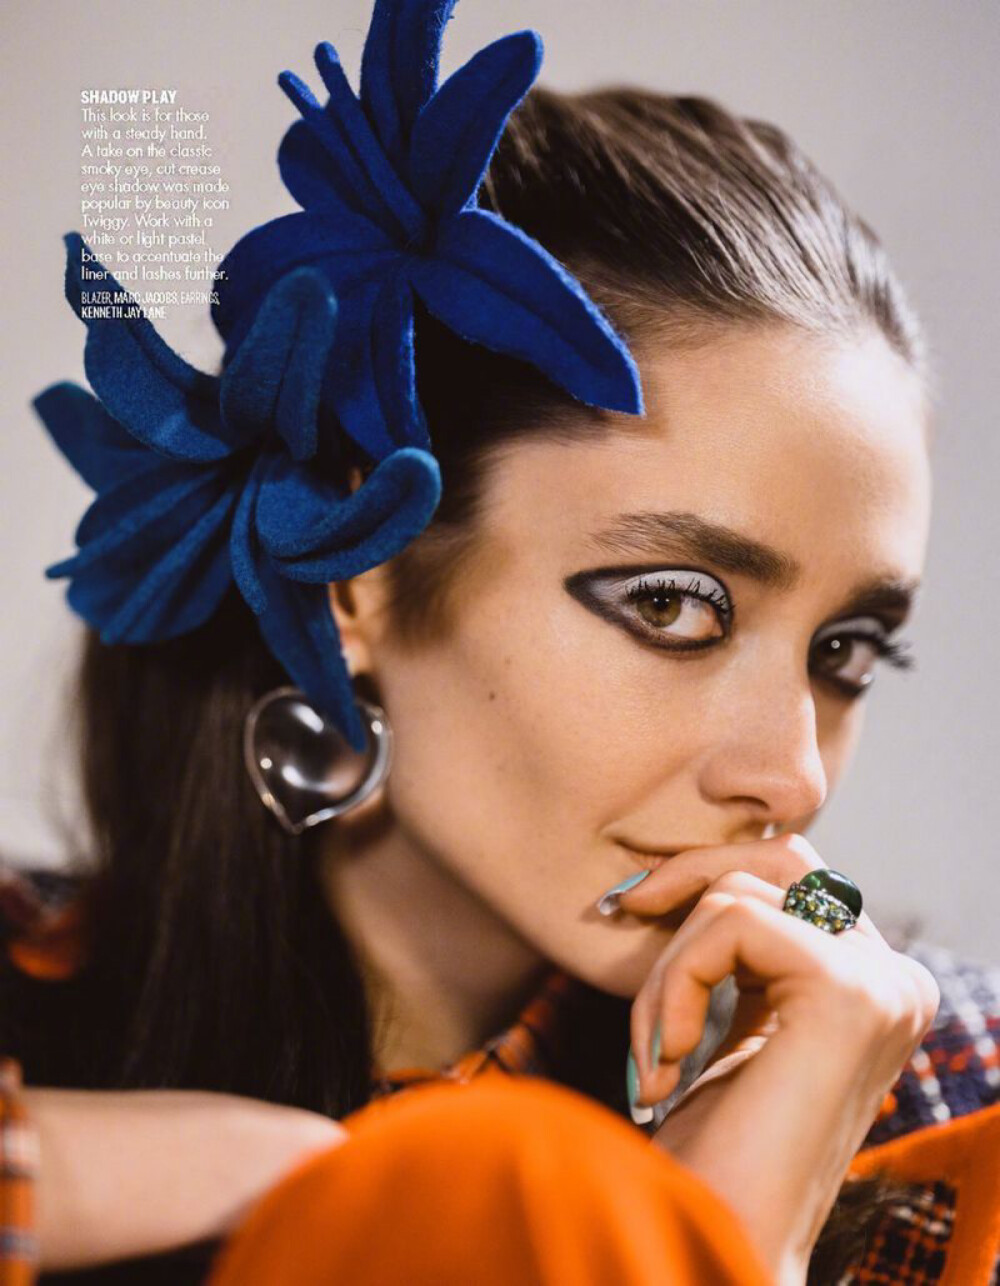 【杂志大片】Vogue Arabia February 2020 阿拉伯版《Vogue》二月刊“Mod Squad” 60s复古美妆片.✨ 模特: Amanda Googe. 摄影: Kat Irlin. ​​​